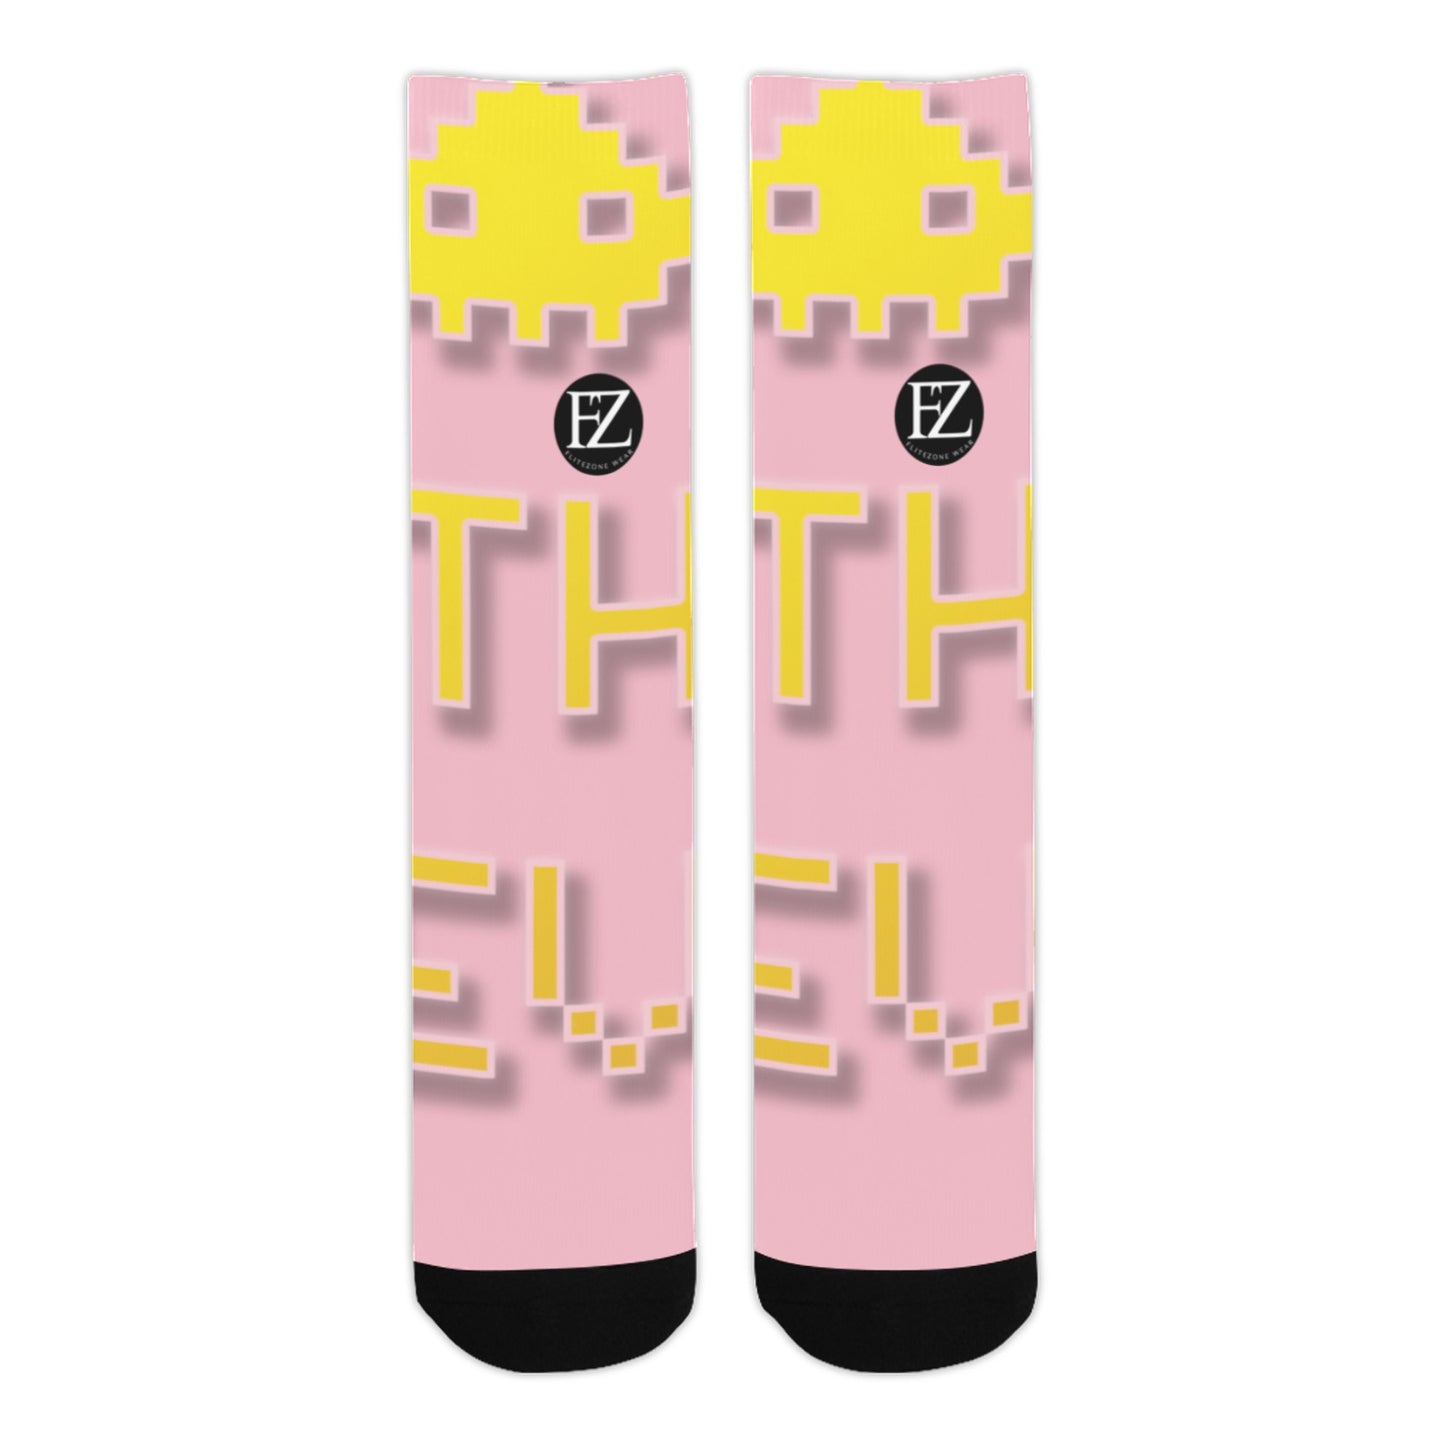 fz unisex socks - yellow one size / fz socks - pink sublimated crew socks(made in usa)